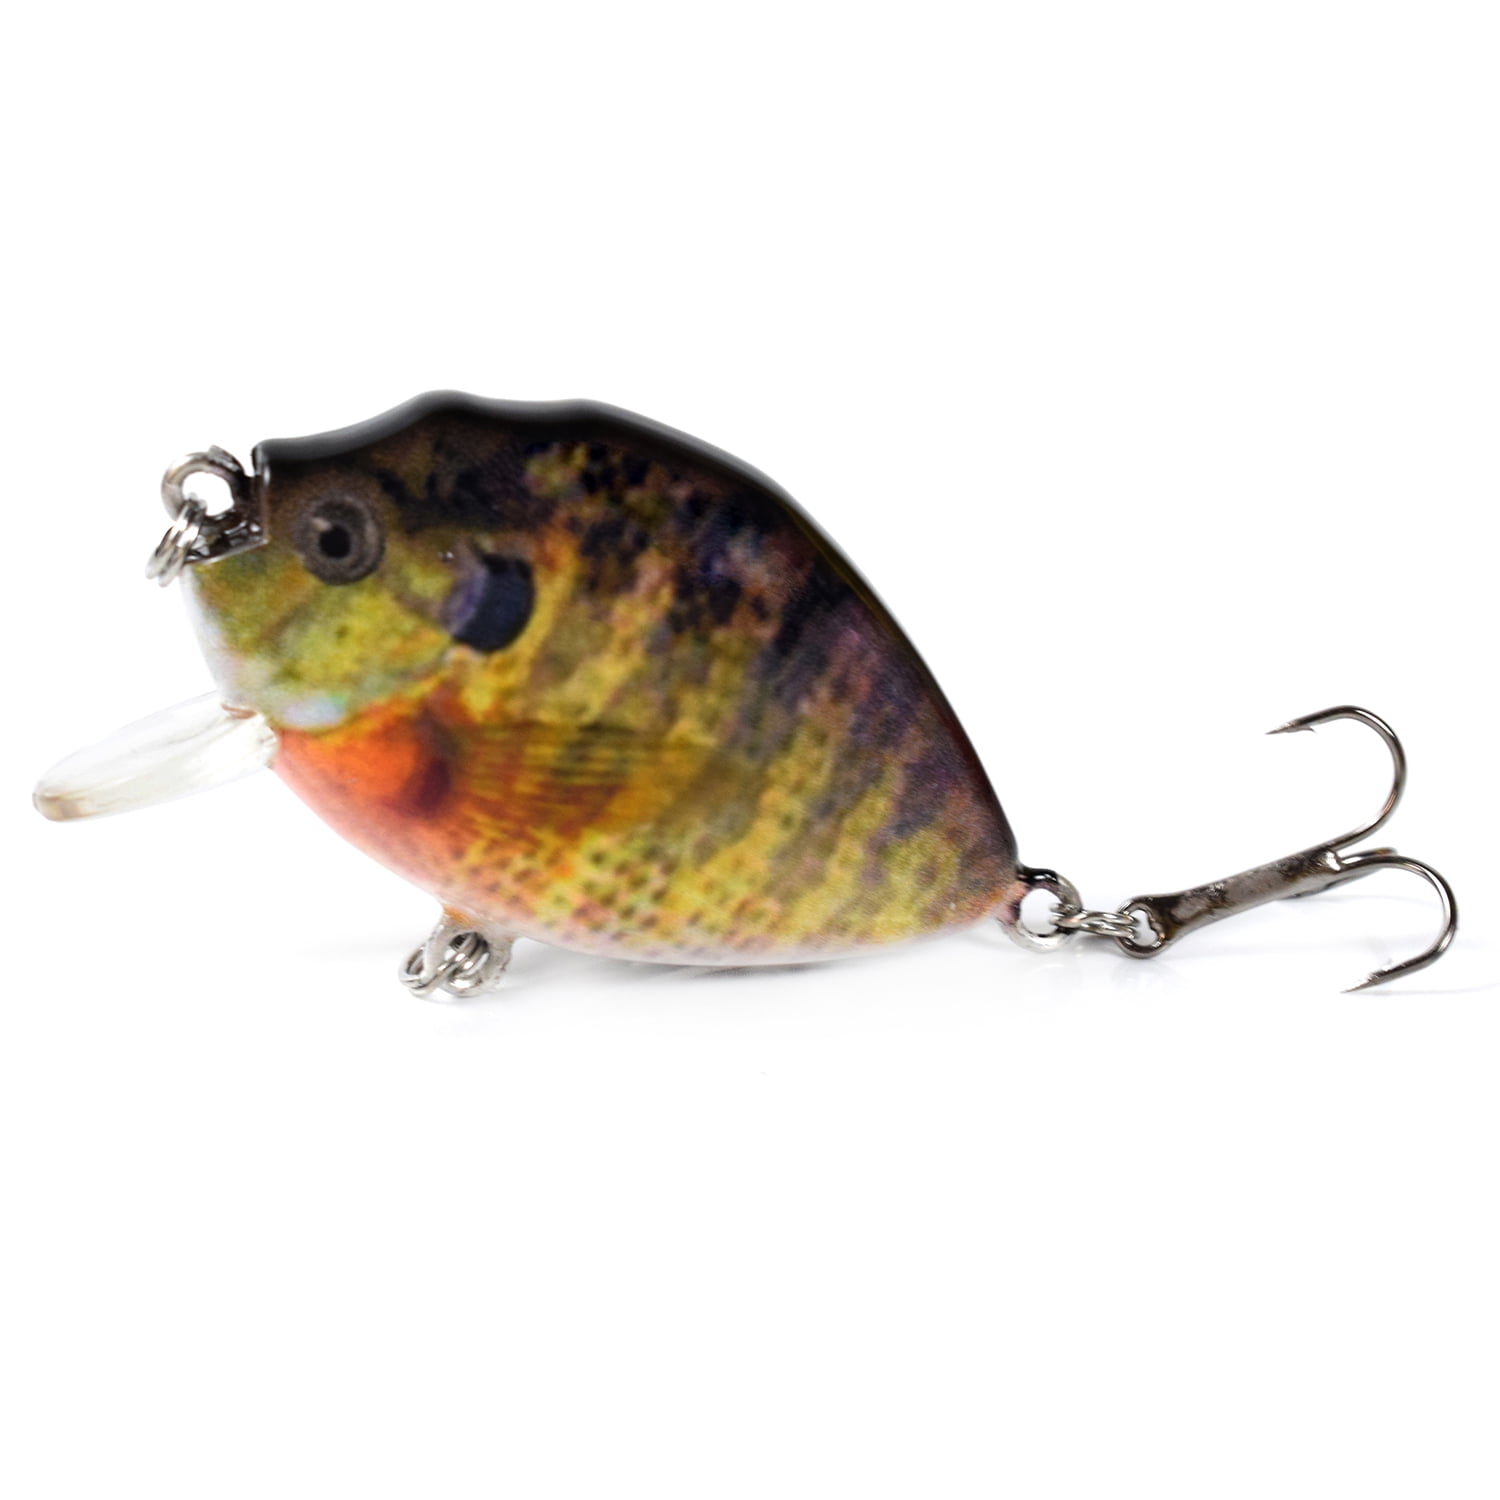 6cm 15g Mini Wobbler Fishing Lure Artificial Hard Bait Crankbait for Fish  Bass Fishing Tackle 